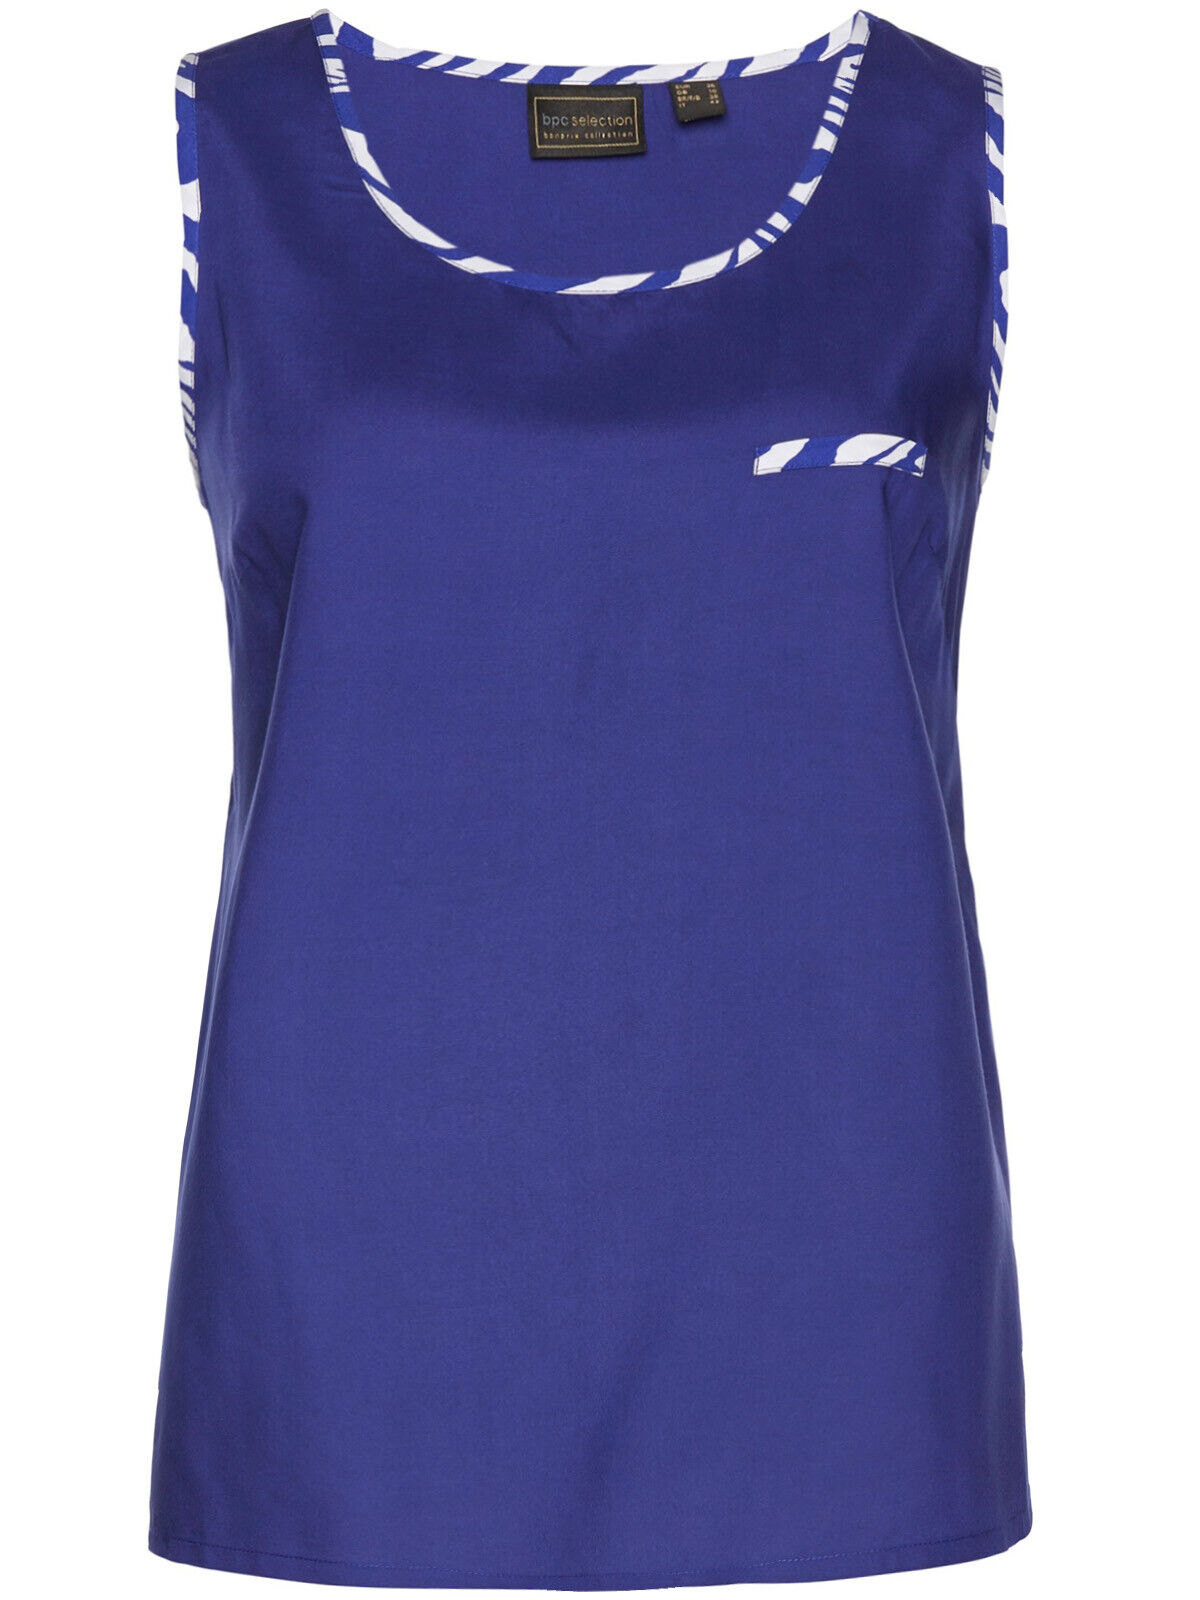 BPC Blue Sleeveless Printed Trim Vest Top in UK Sizes 20, 22, 24, 26, 28